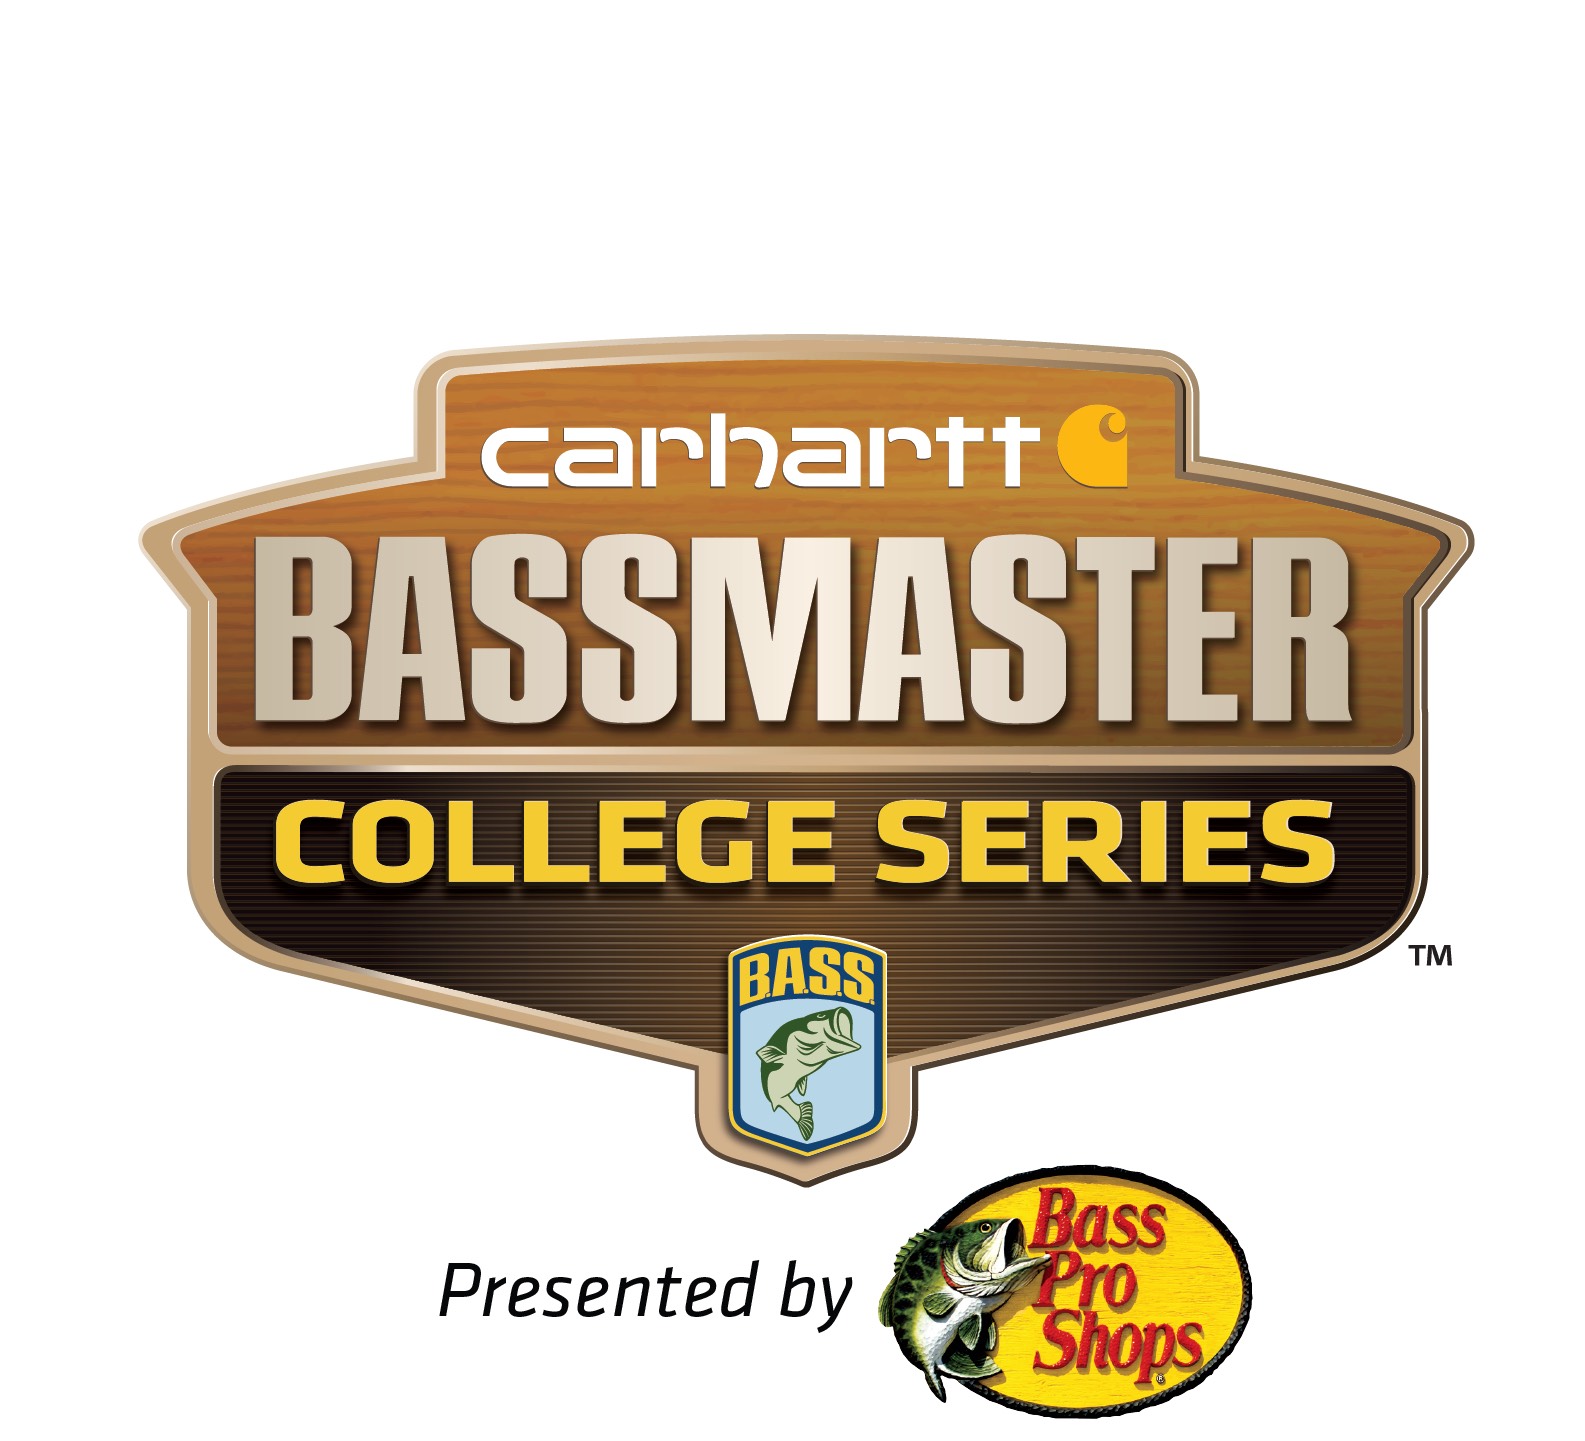 Basmaster College Series